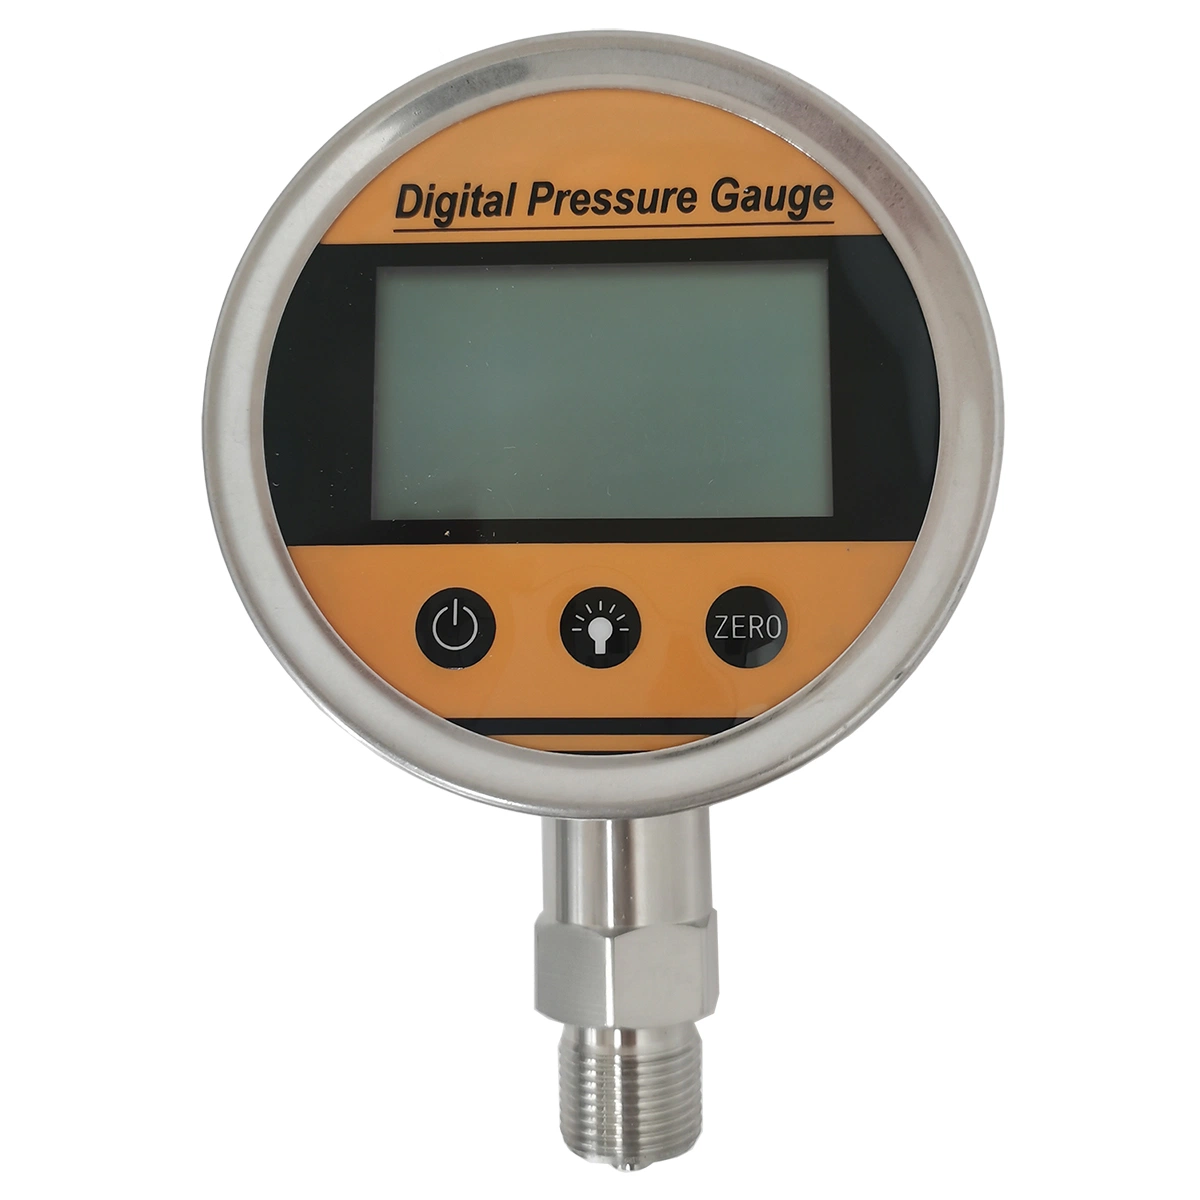 Digital Pressure Gauge with LCD Display for Water Petroleum Chemical